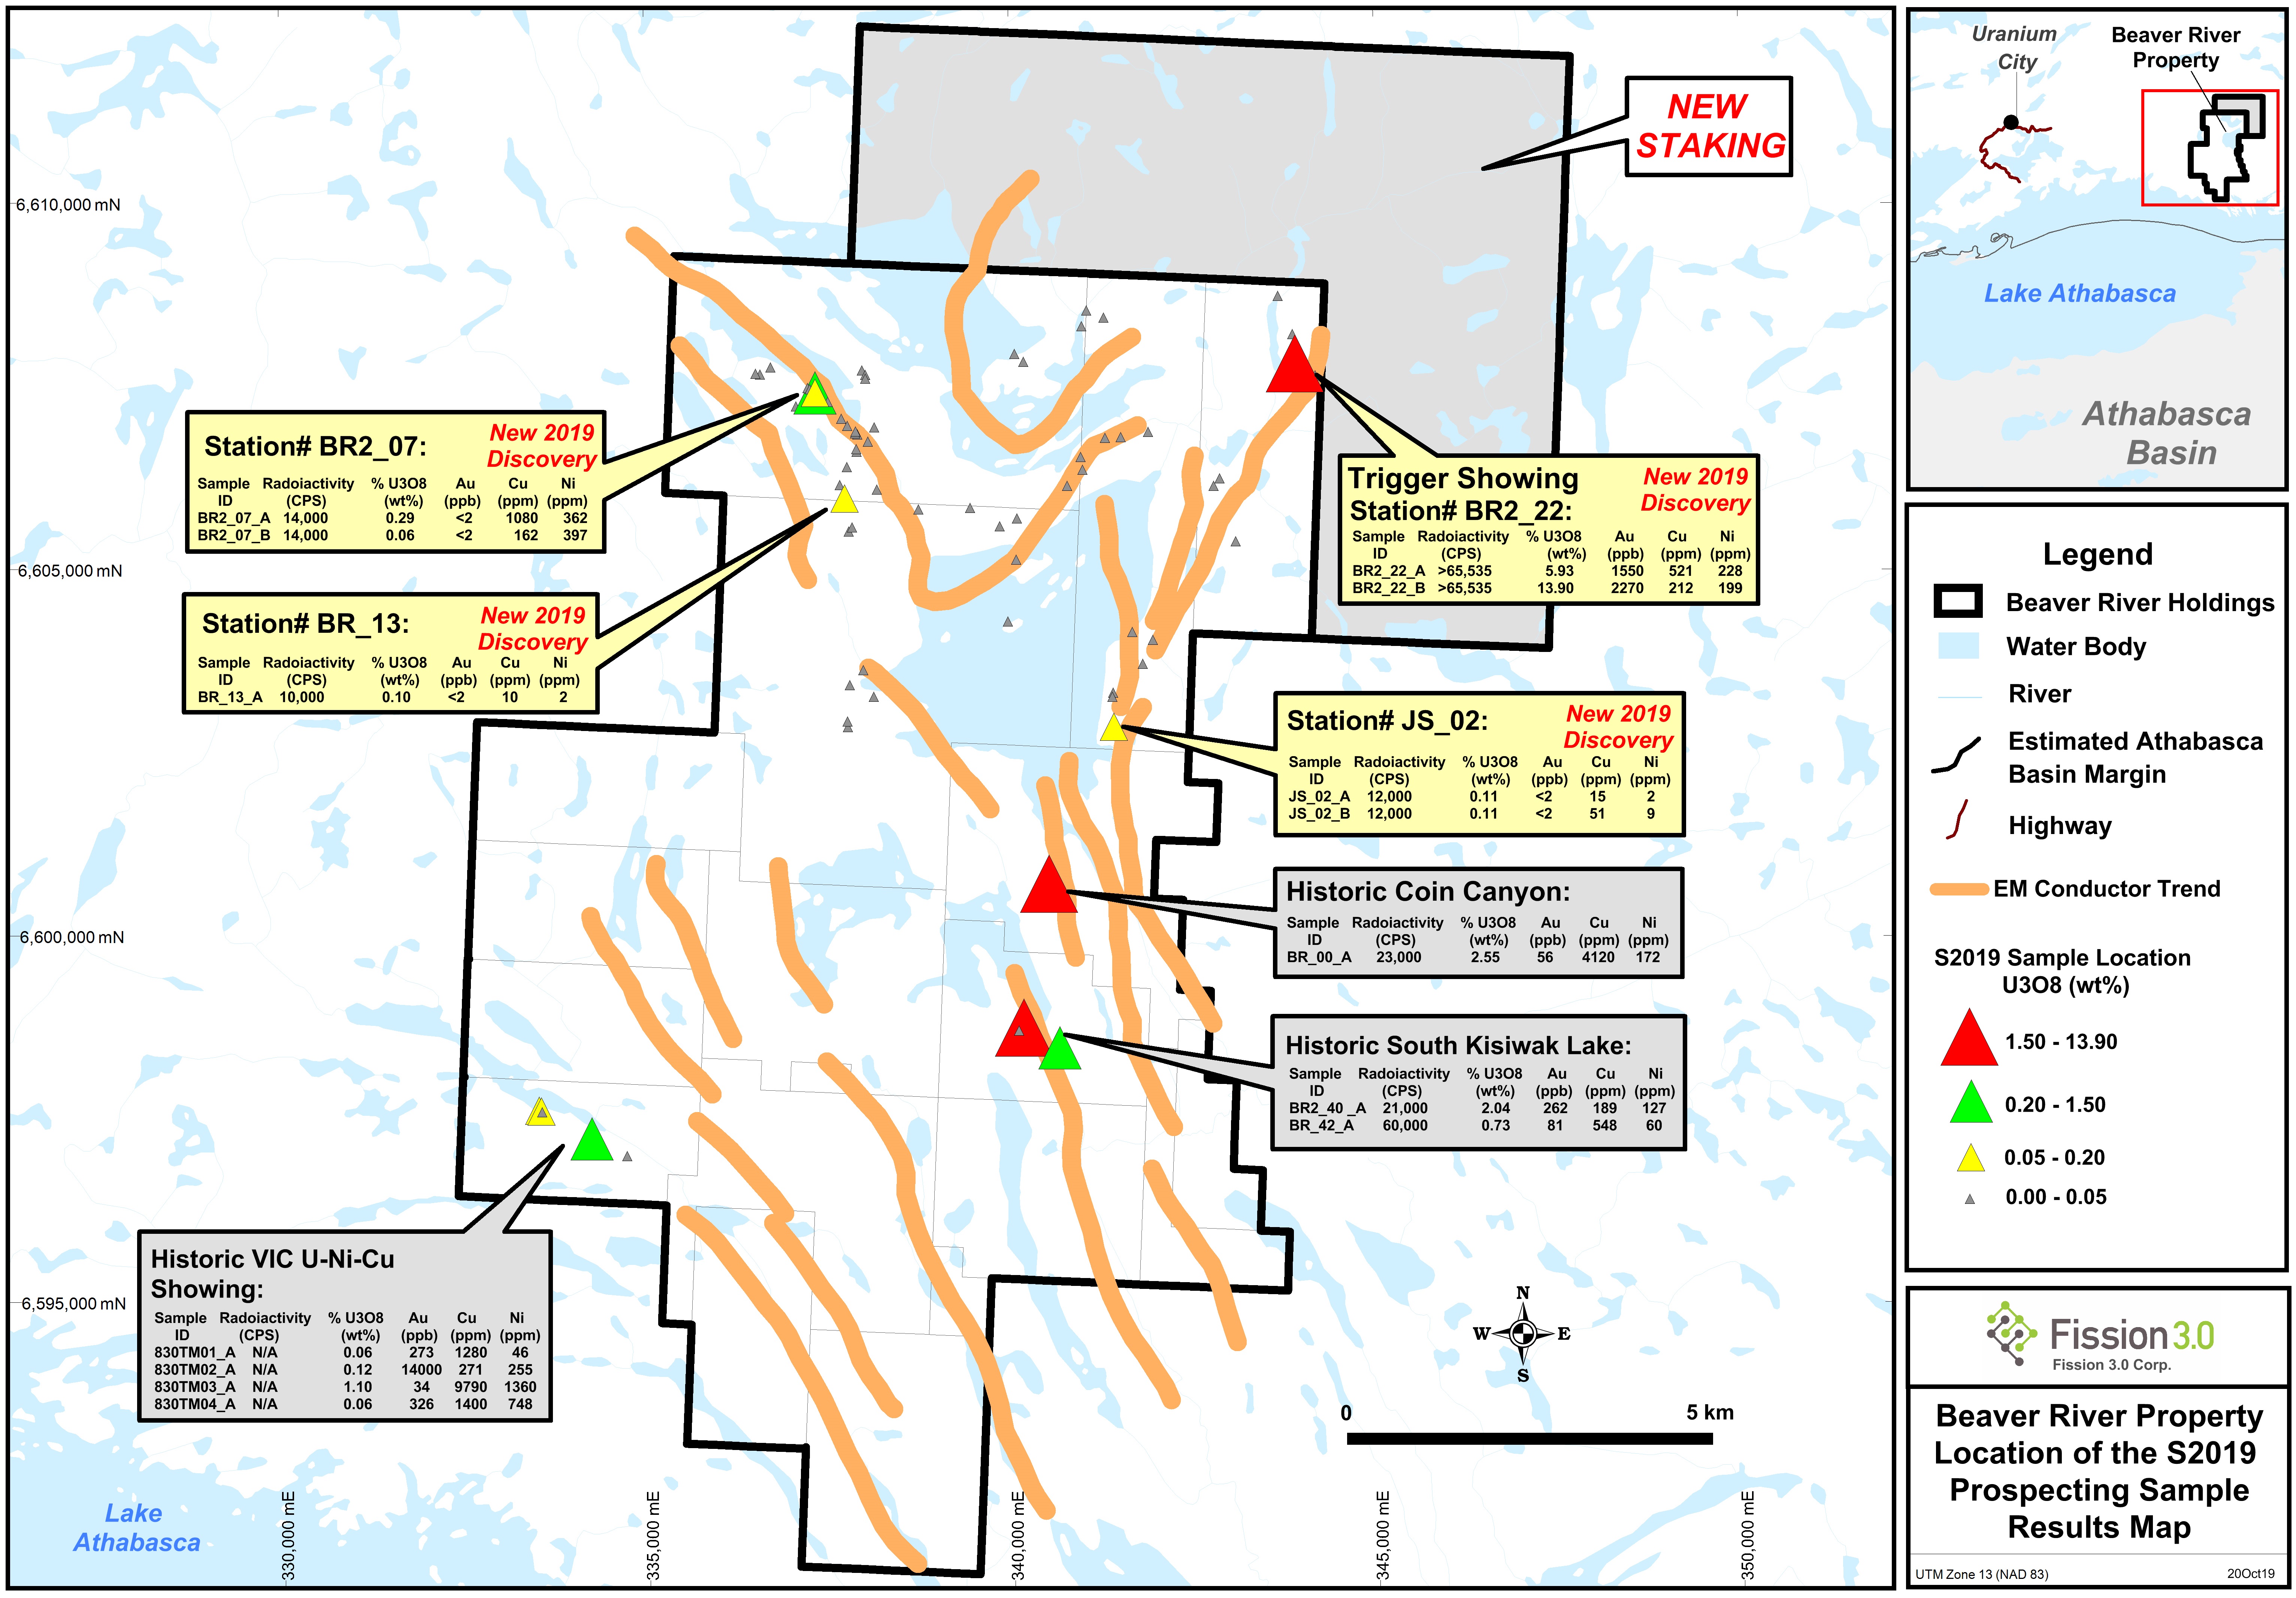 Beaver River Property S2019 Prospecting Sample Result Map.